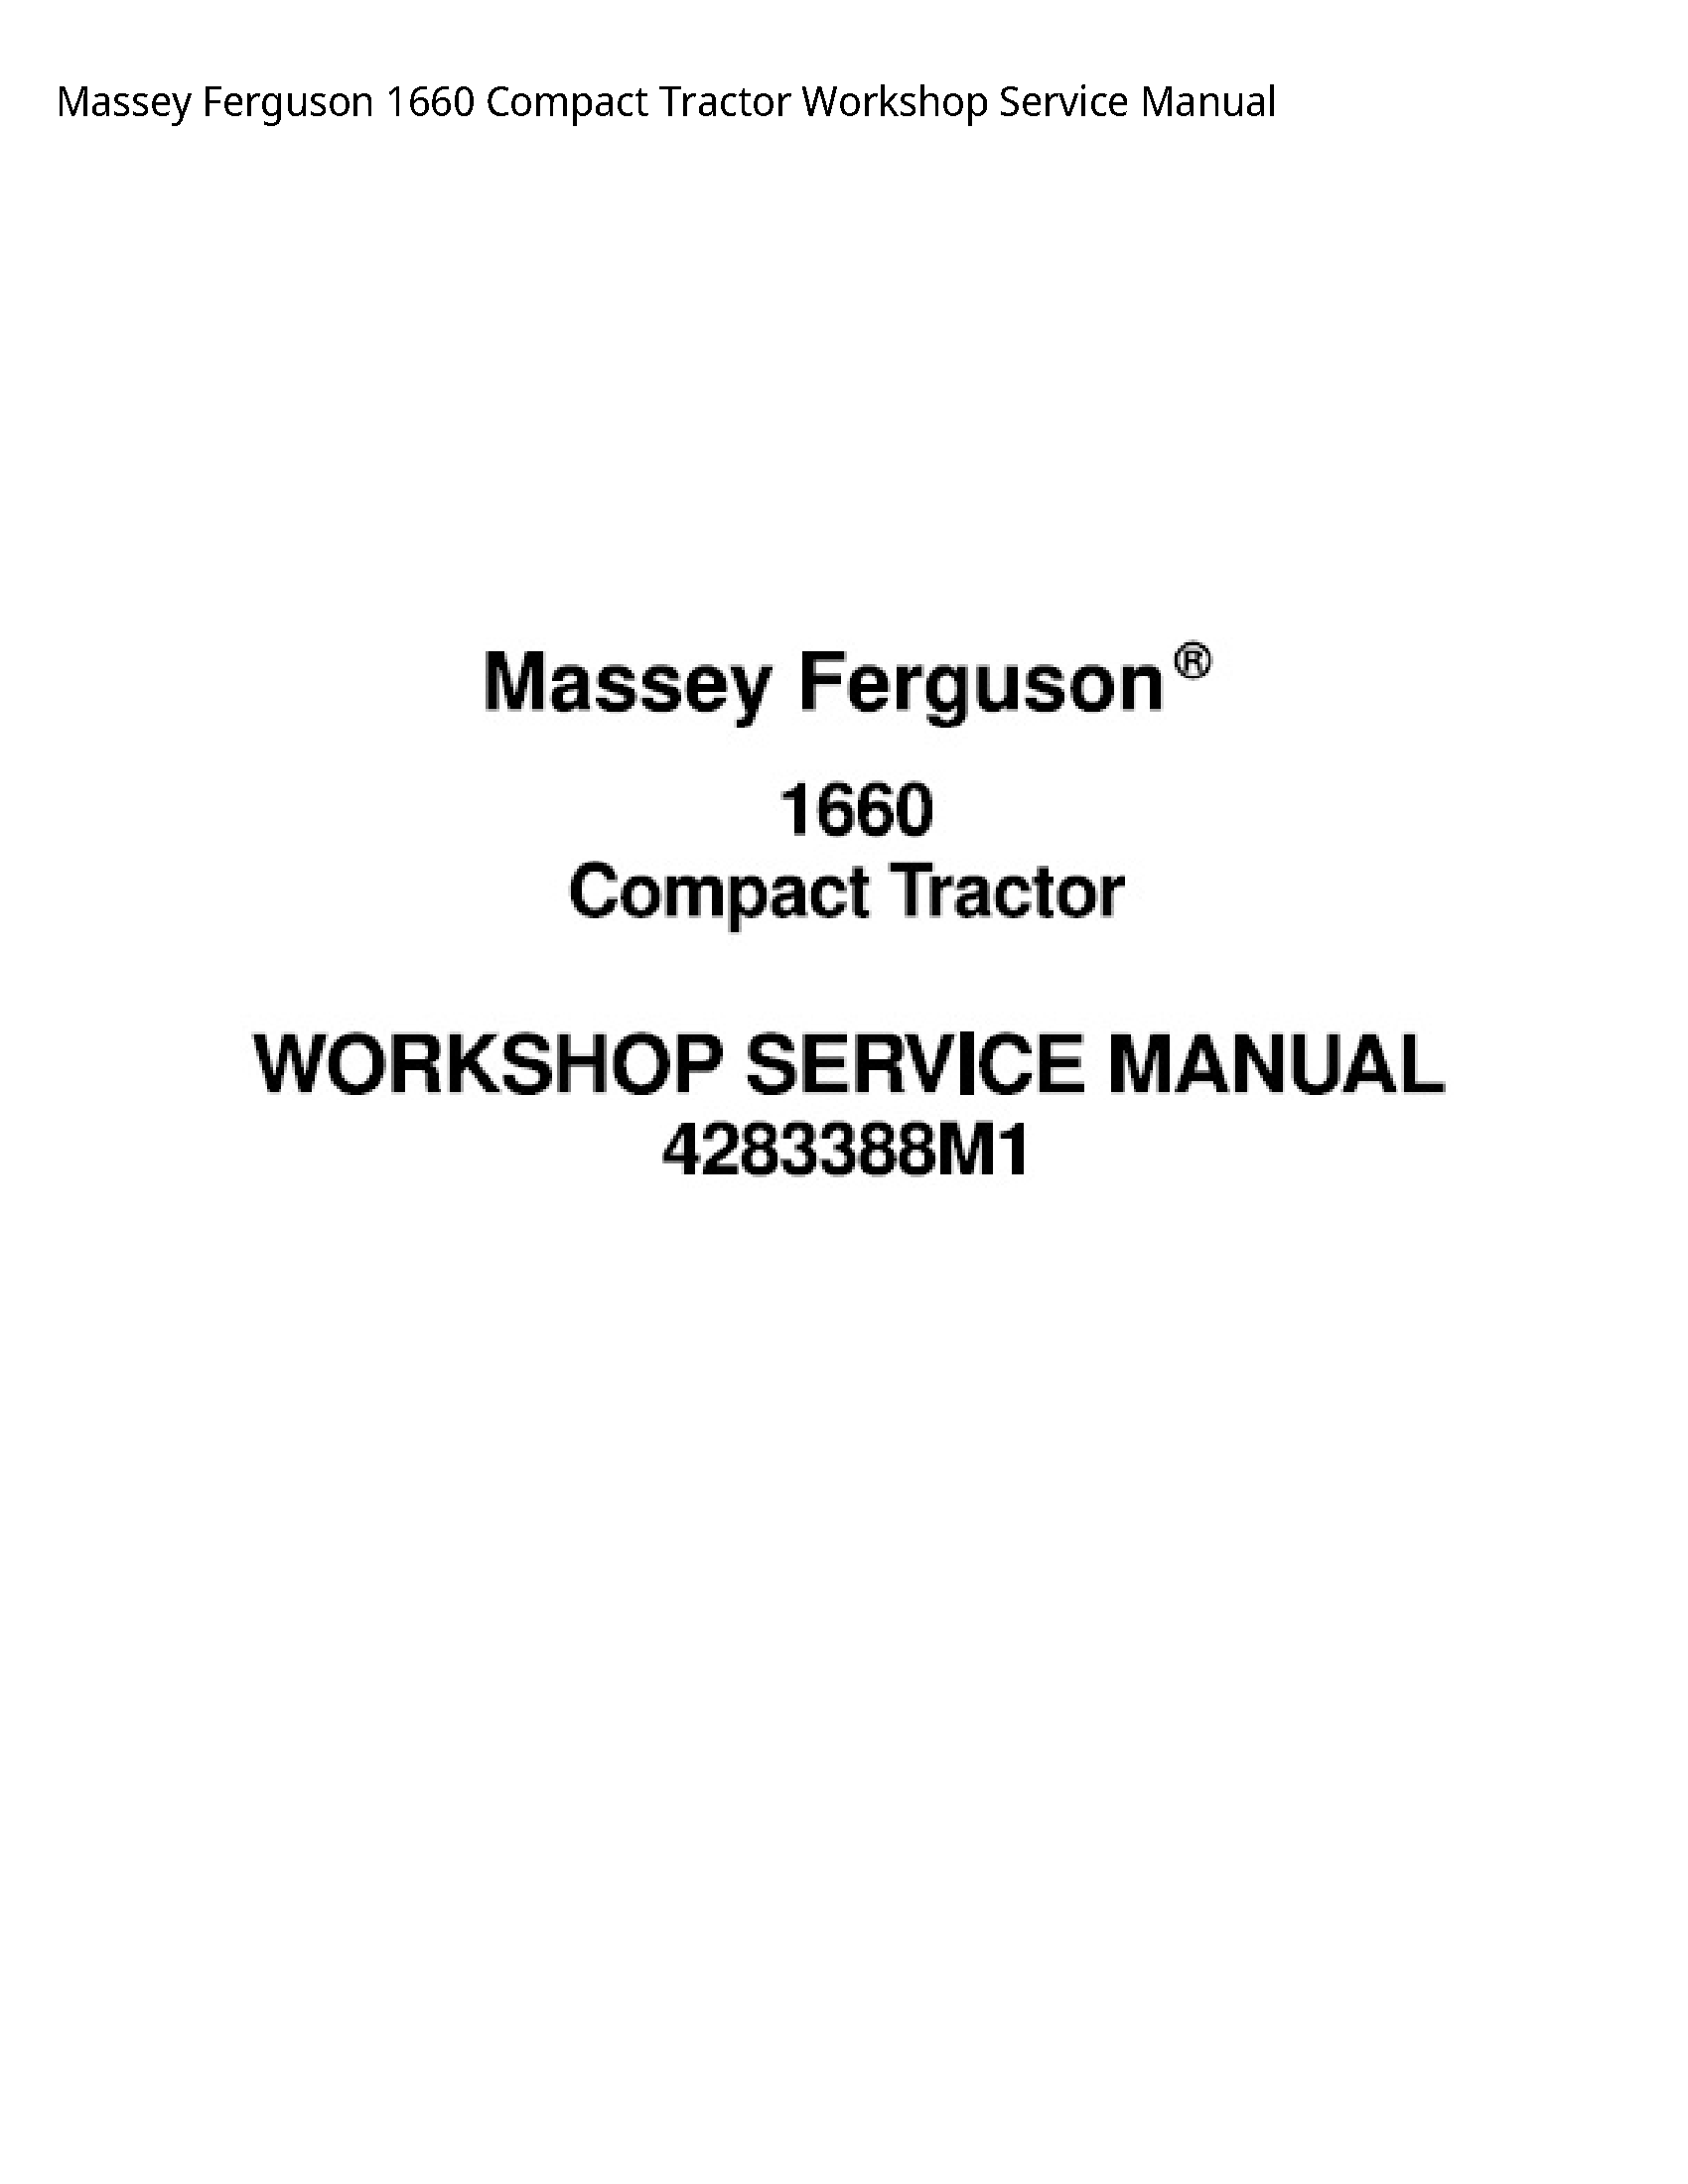 Massey Ferguson 1660 Compact Tractor Service manual